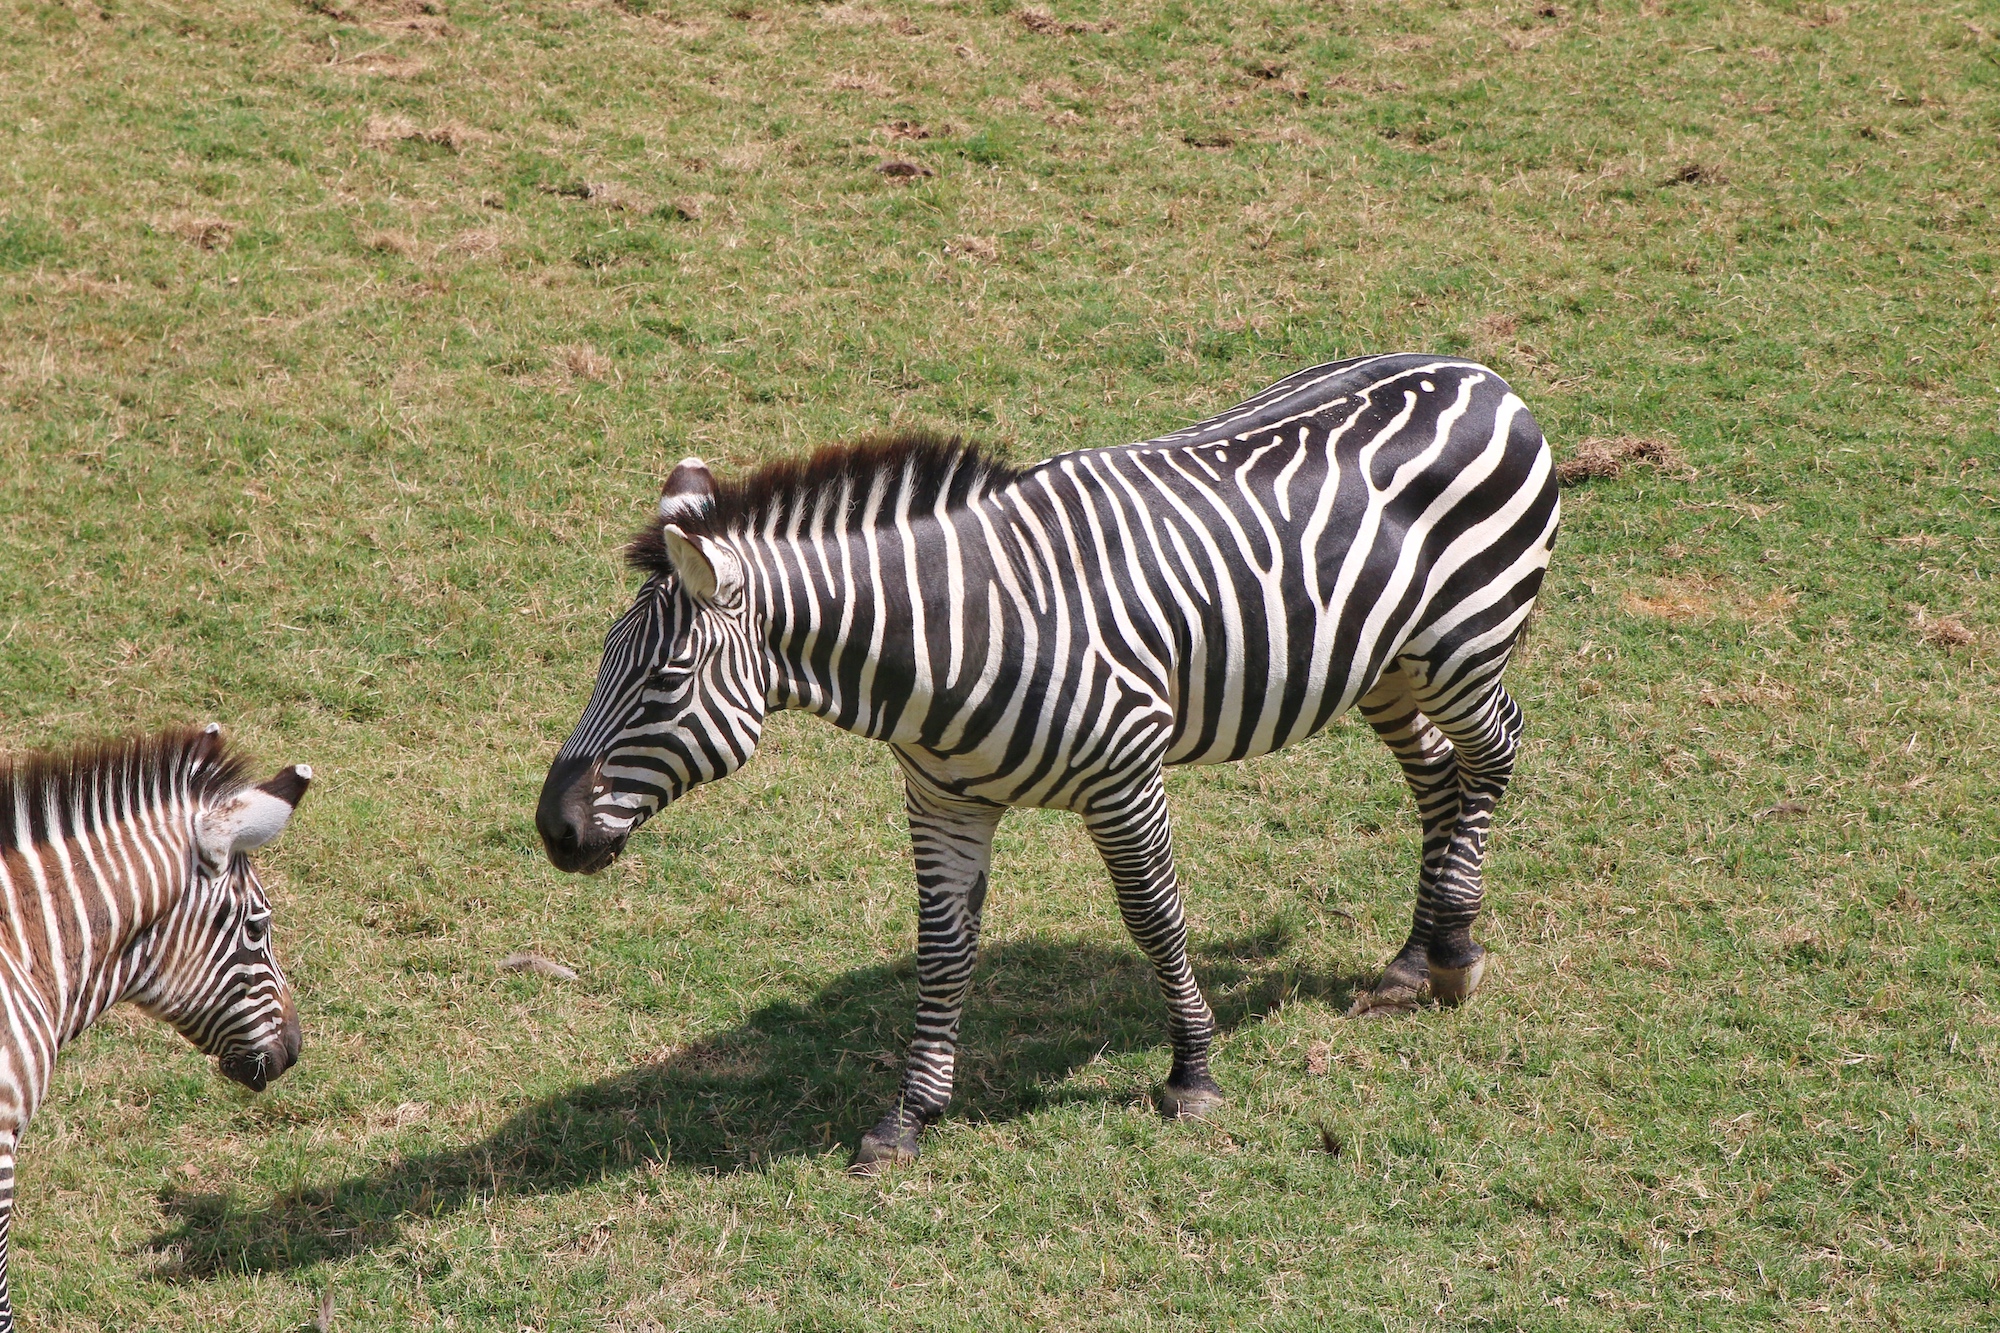 zebra habitat at Fort Worth zoo